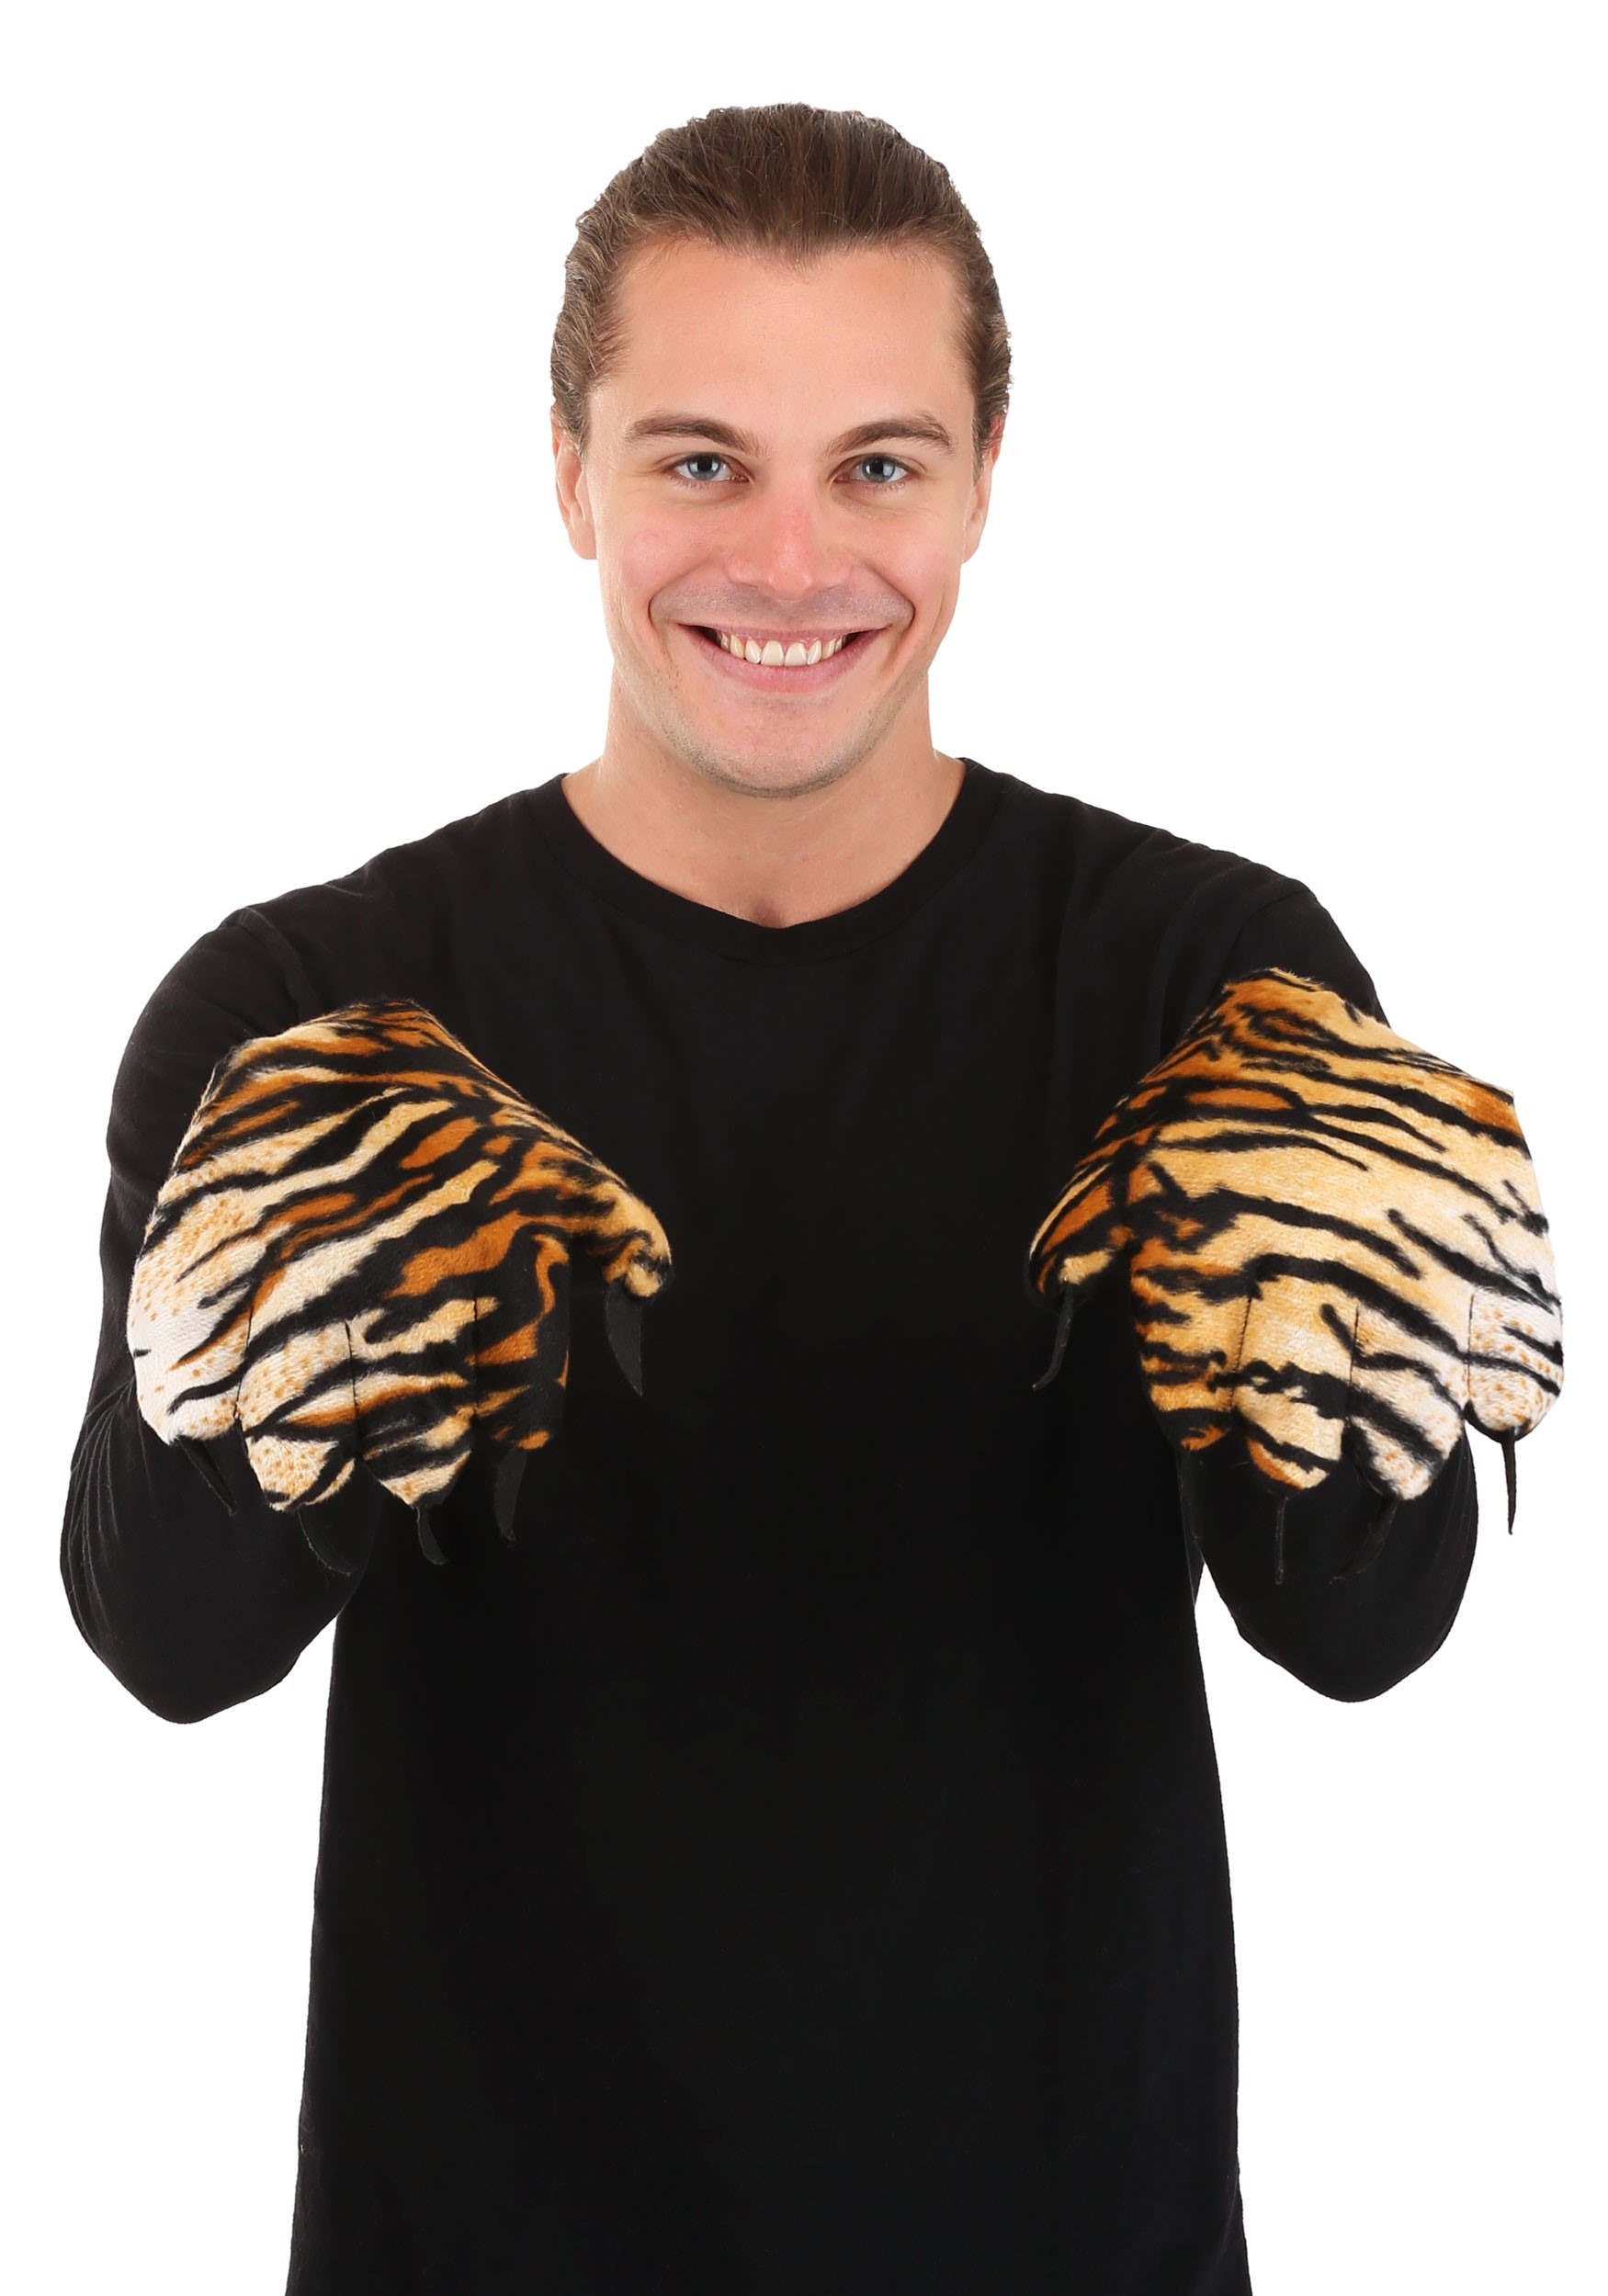 Tiger Paw Gloves